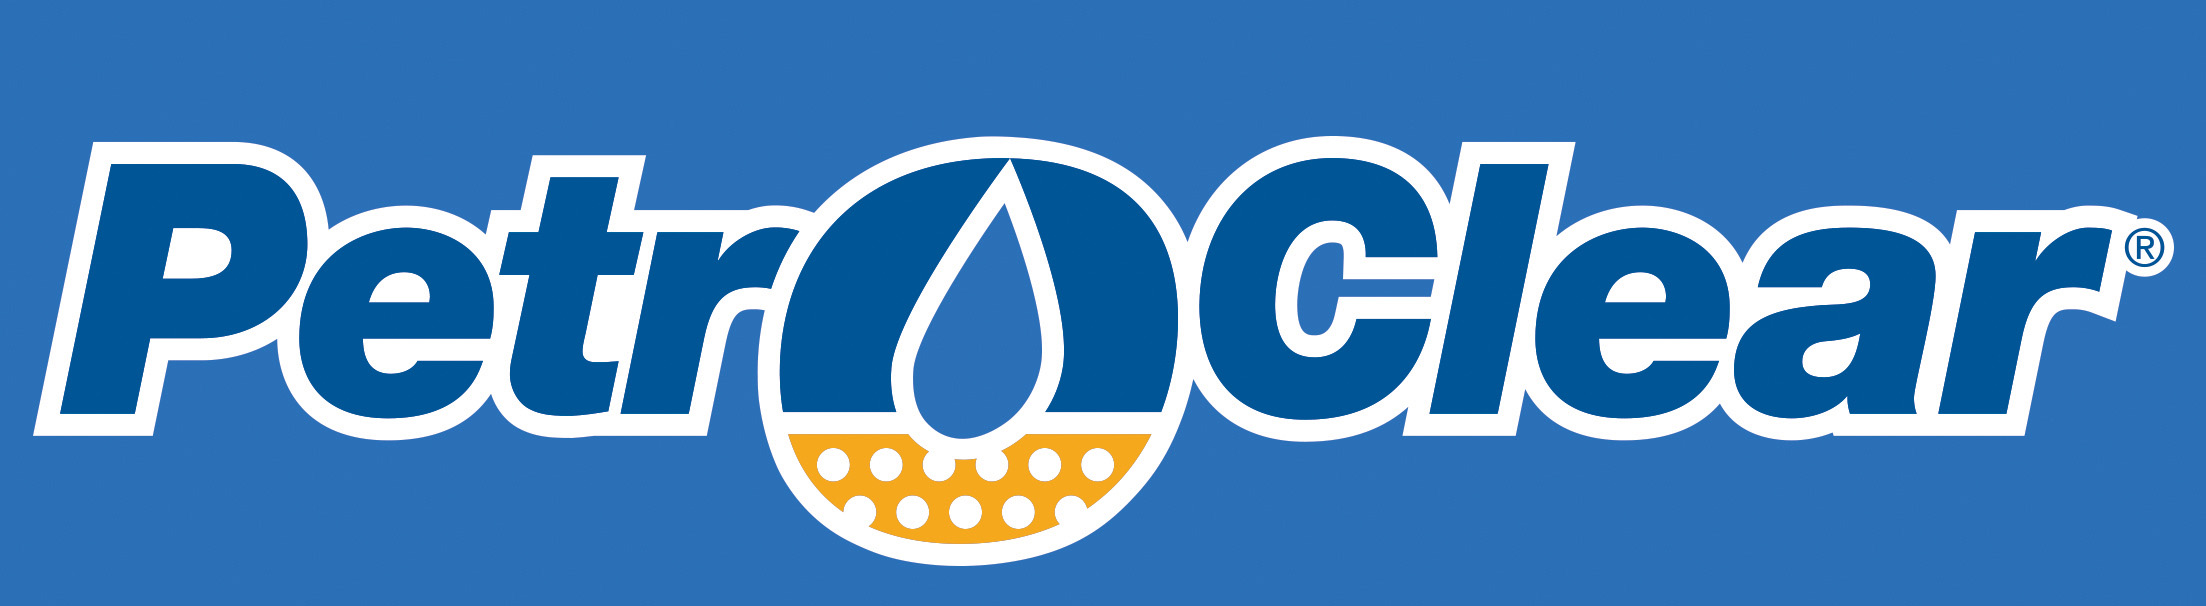 PetroClear Logo Outline on Blue